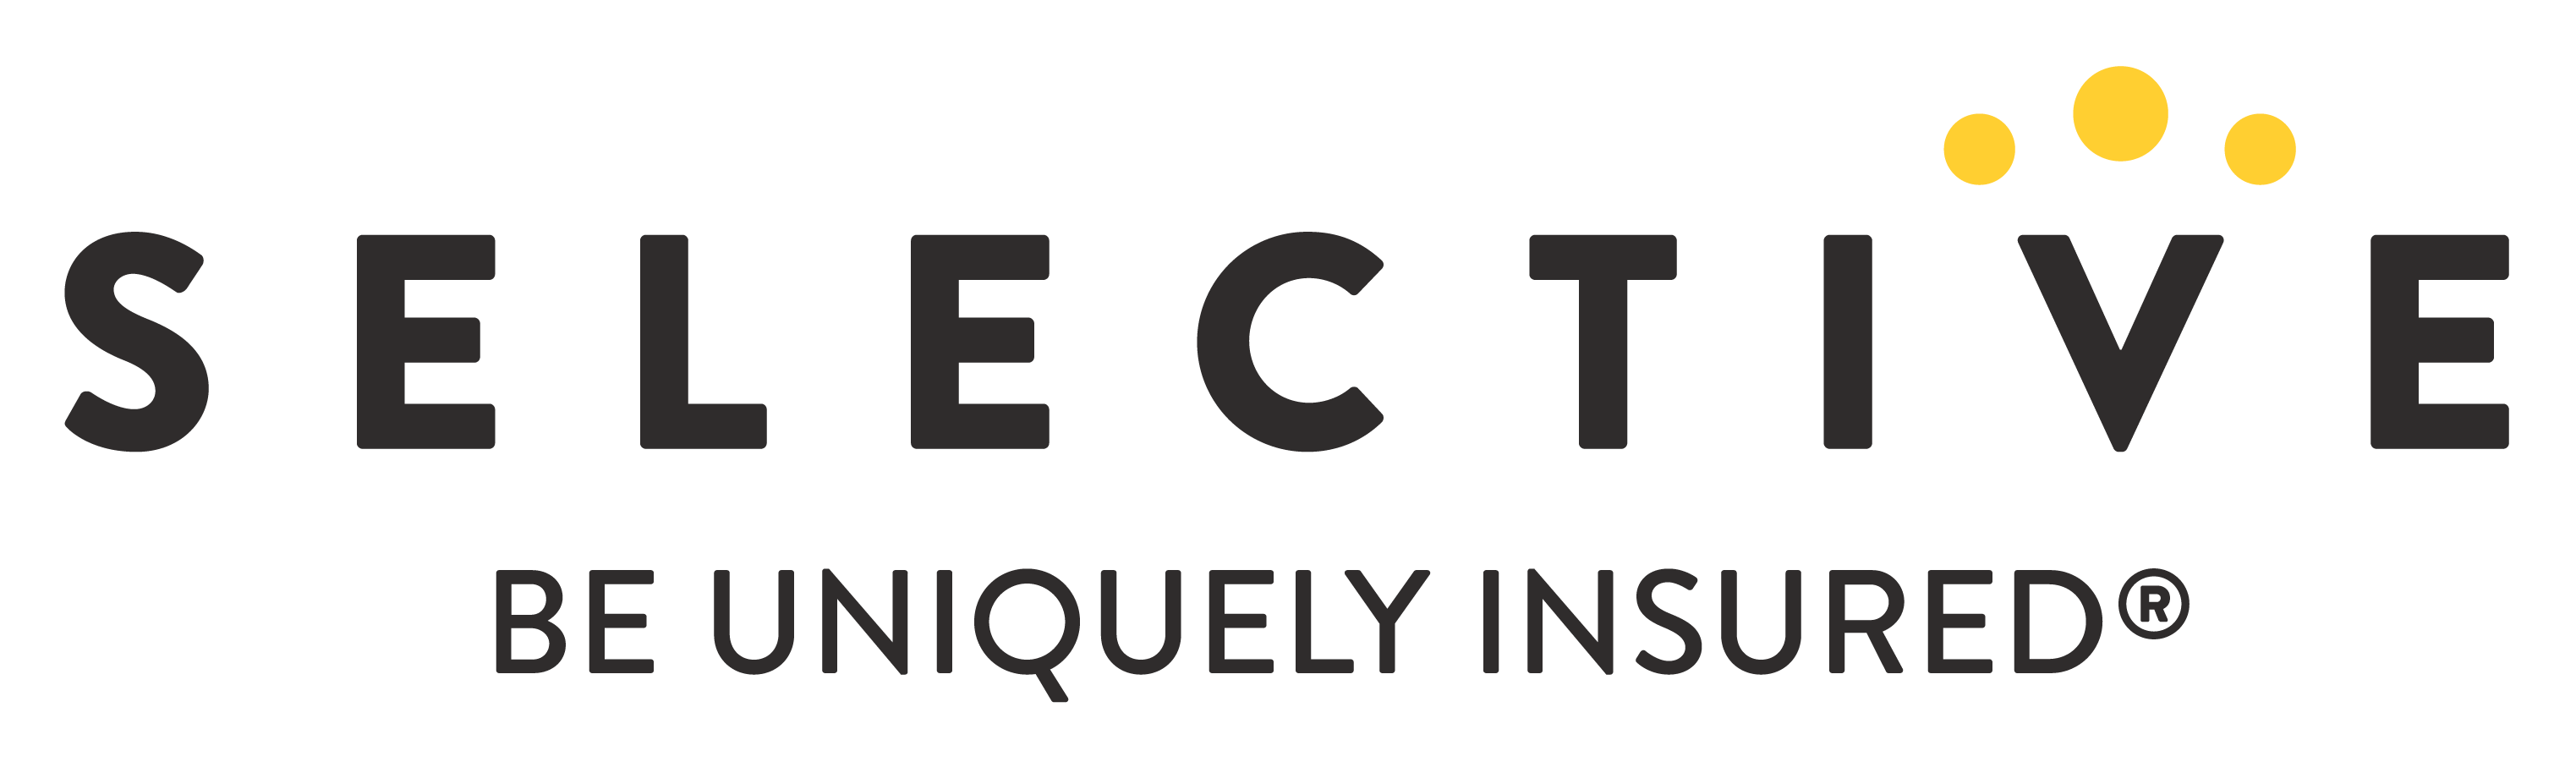 Logo for Selective